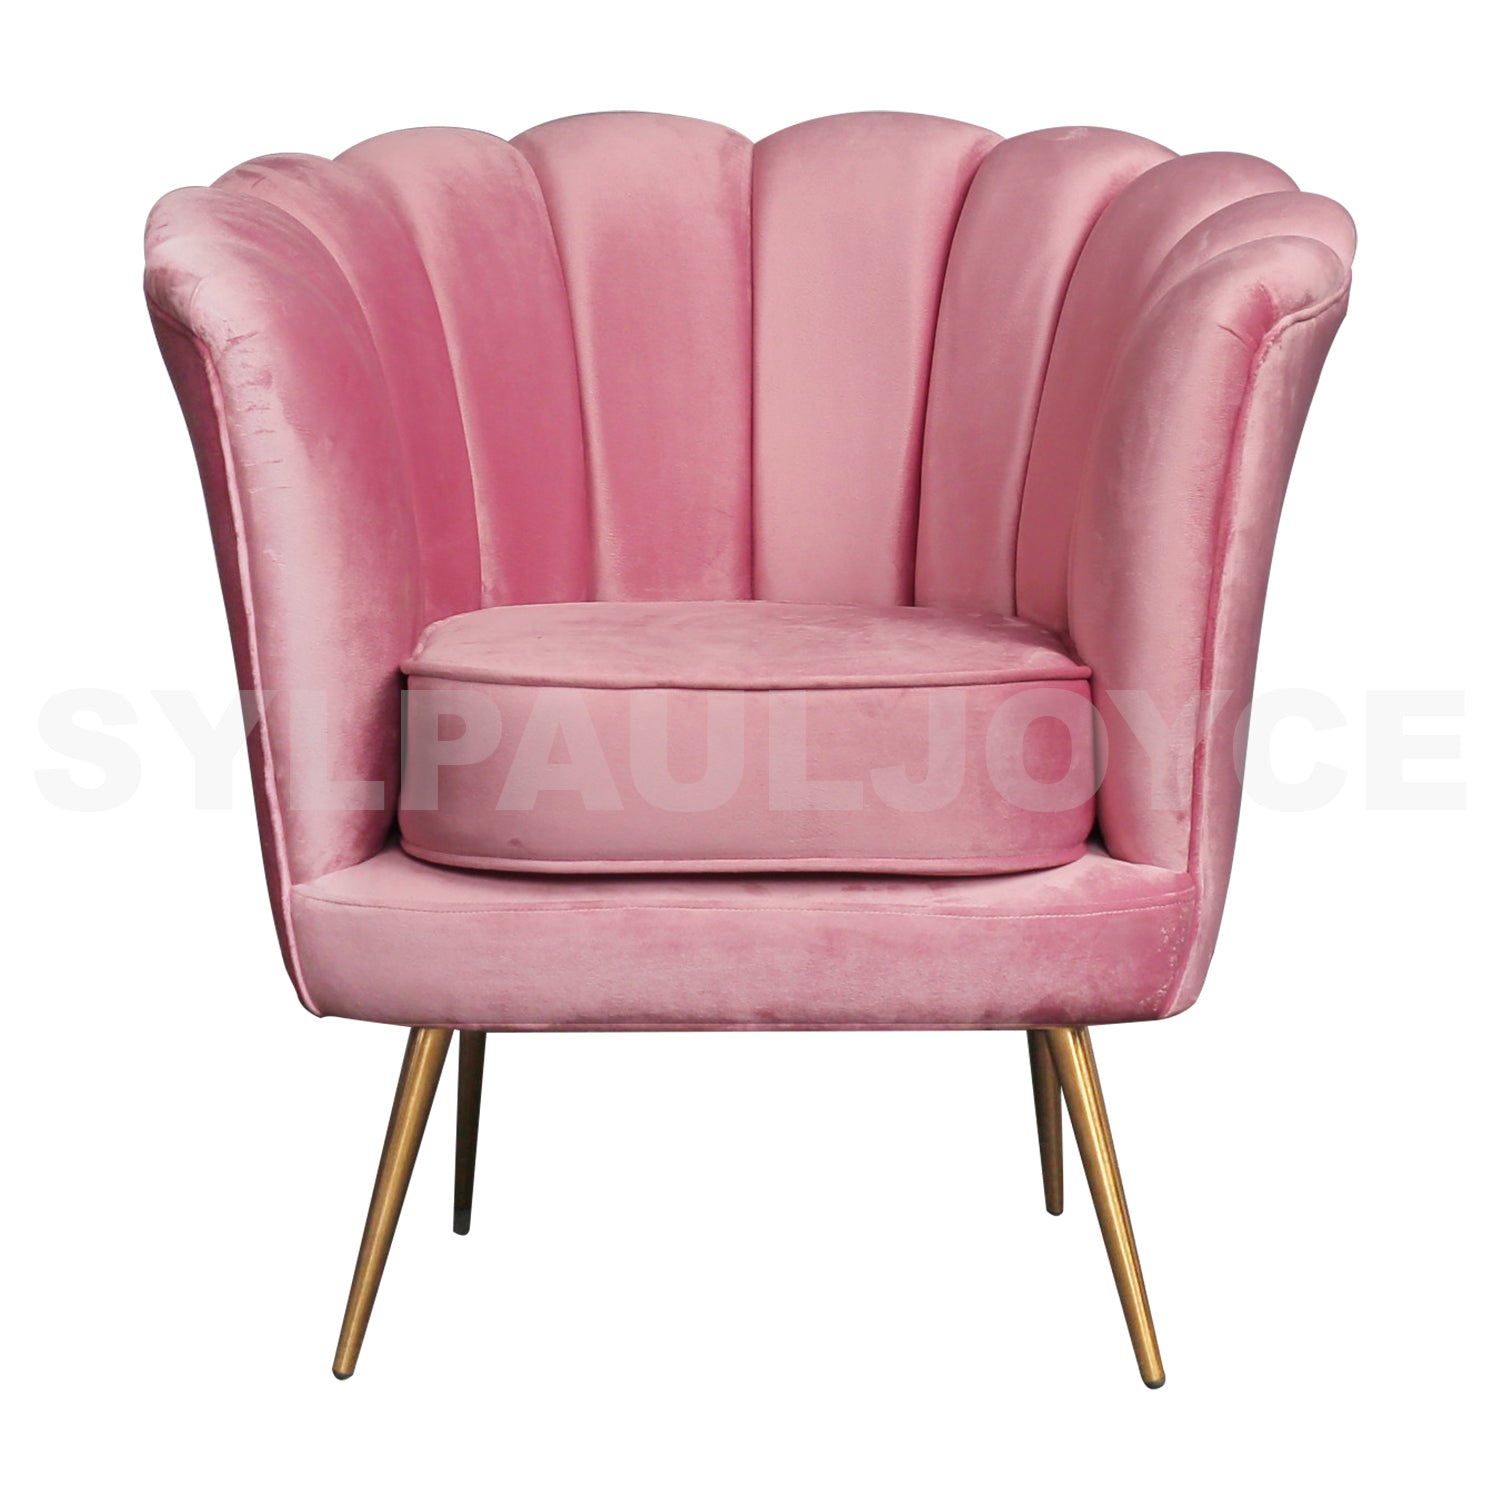 Nathalie Seashell Chair